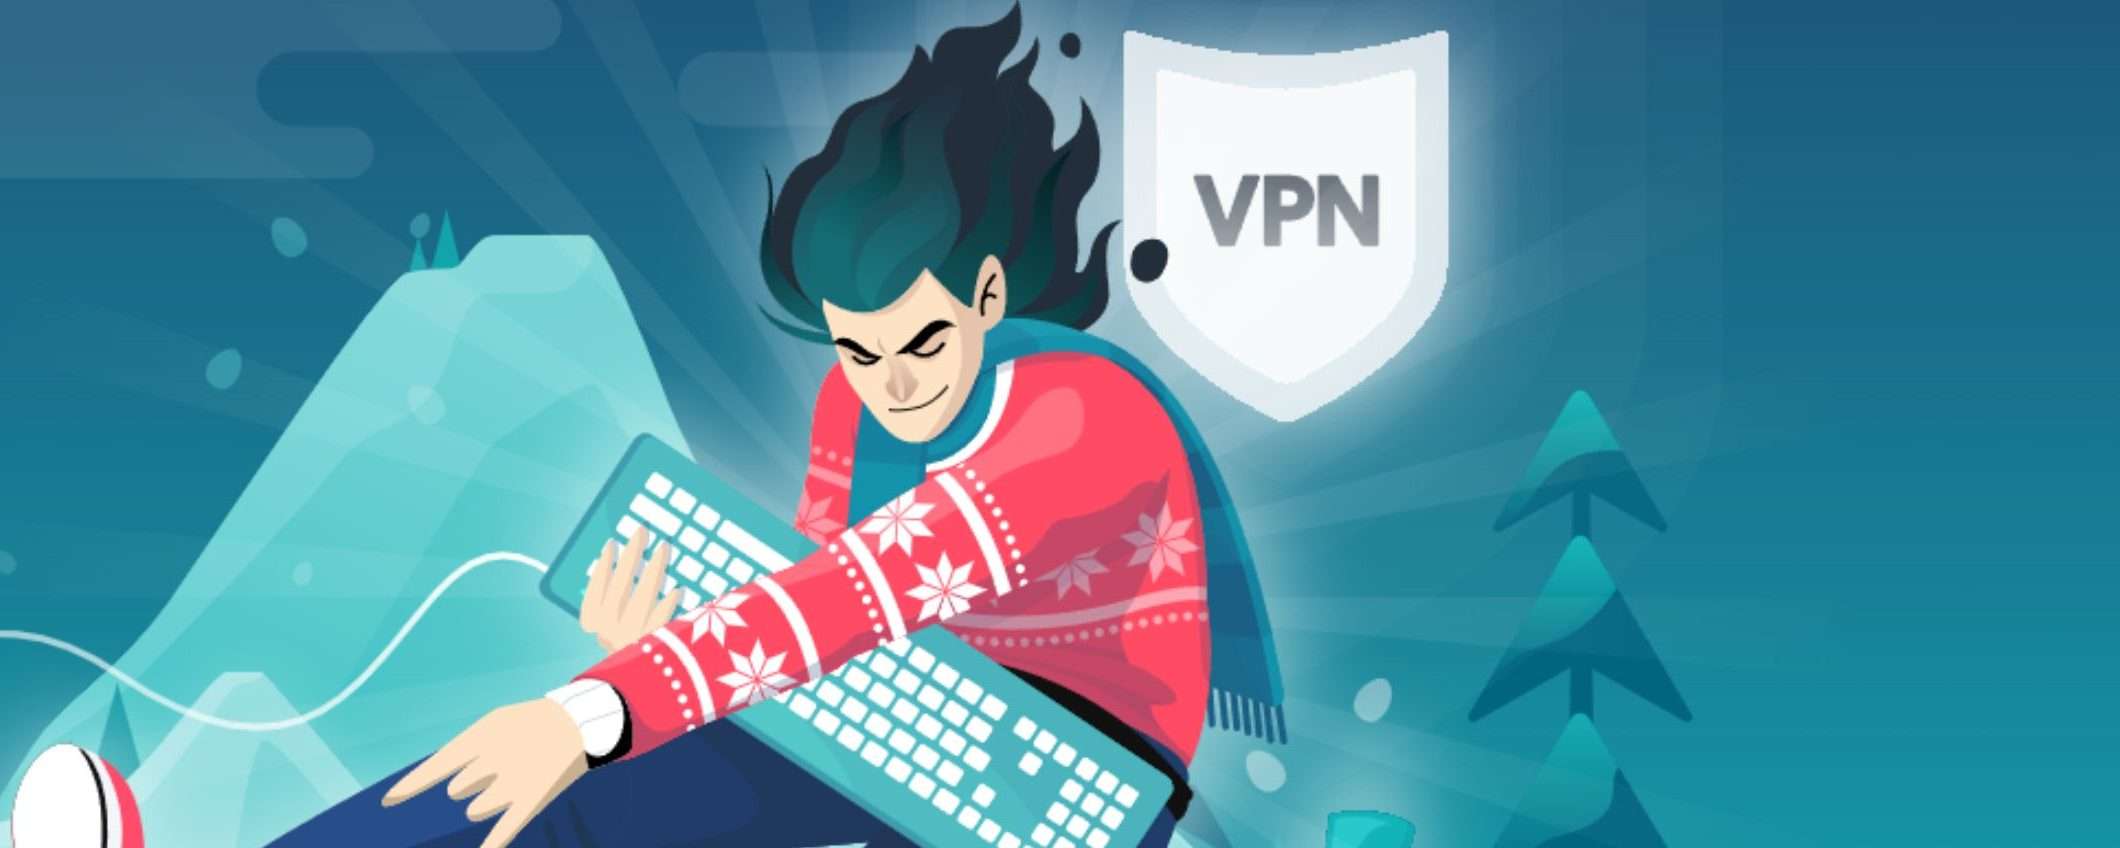 Regalati una VPN per Natale: con Surfshark hai 1 anno GRATIS